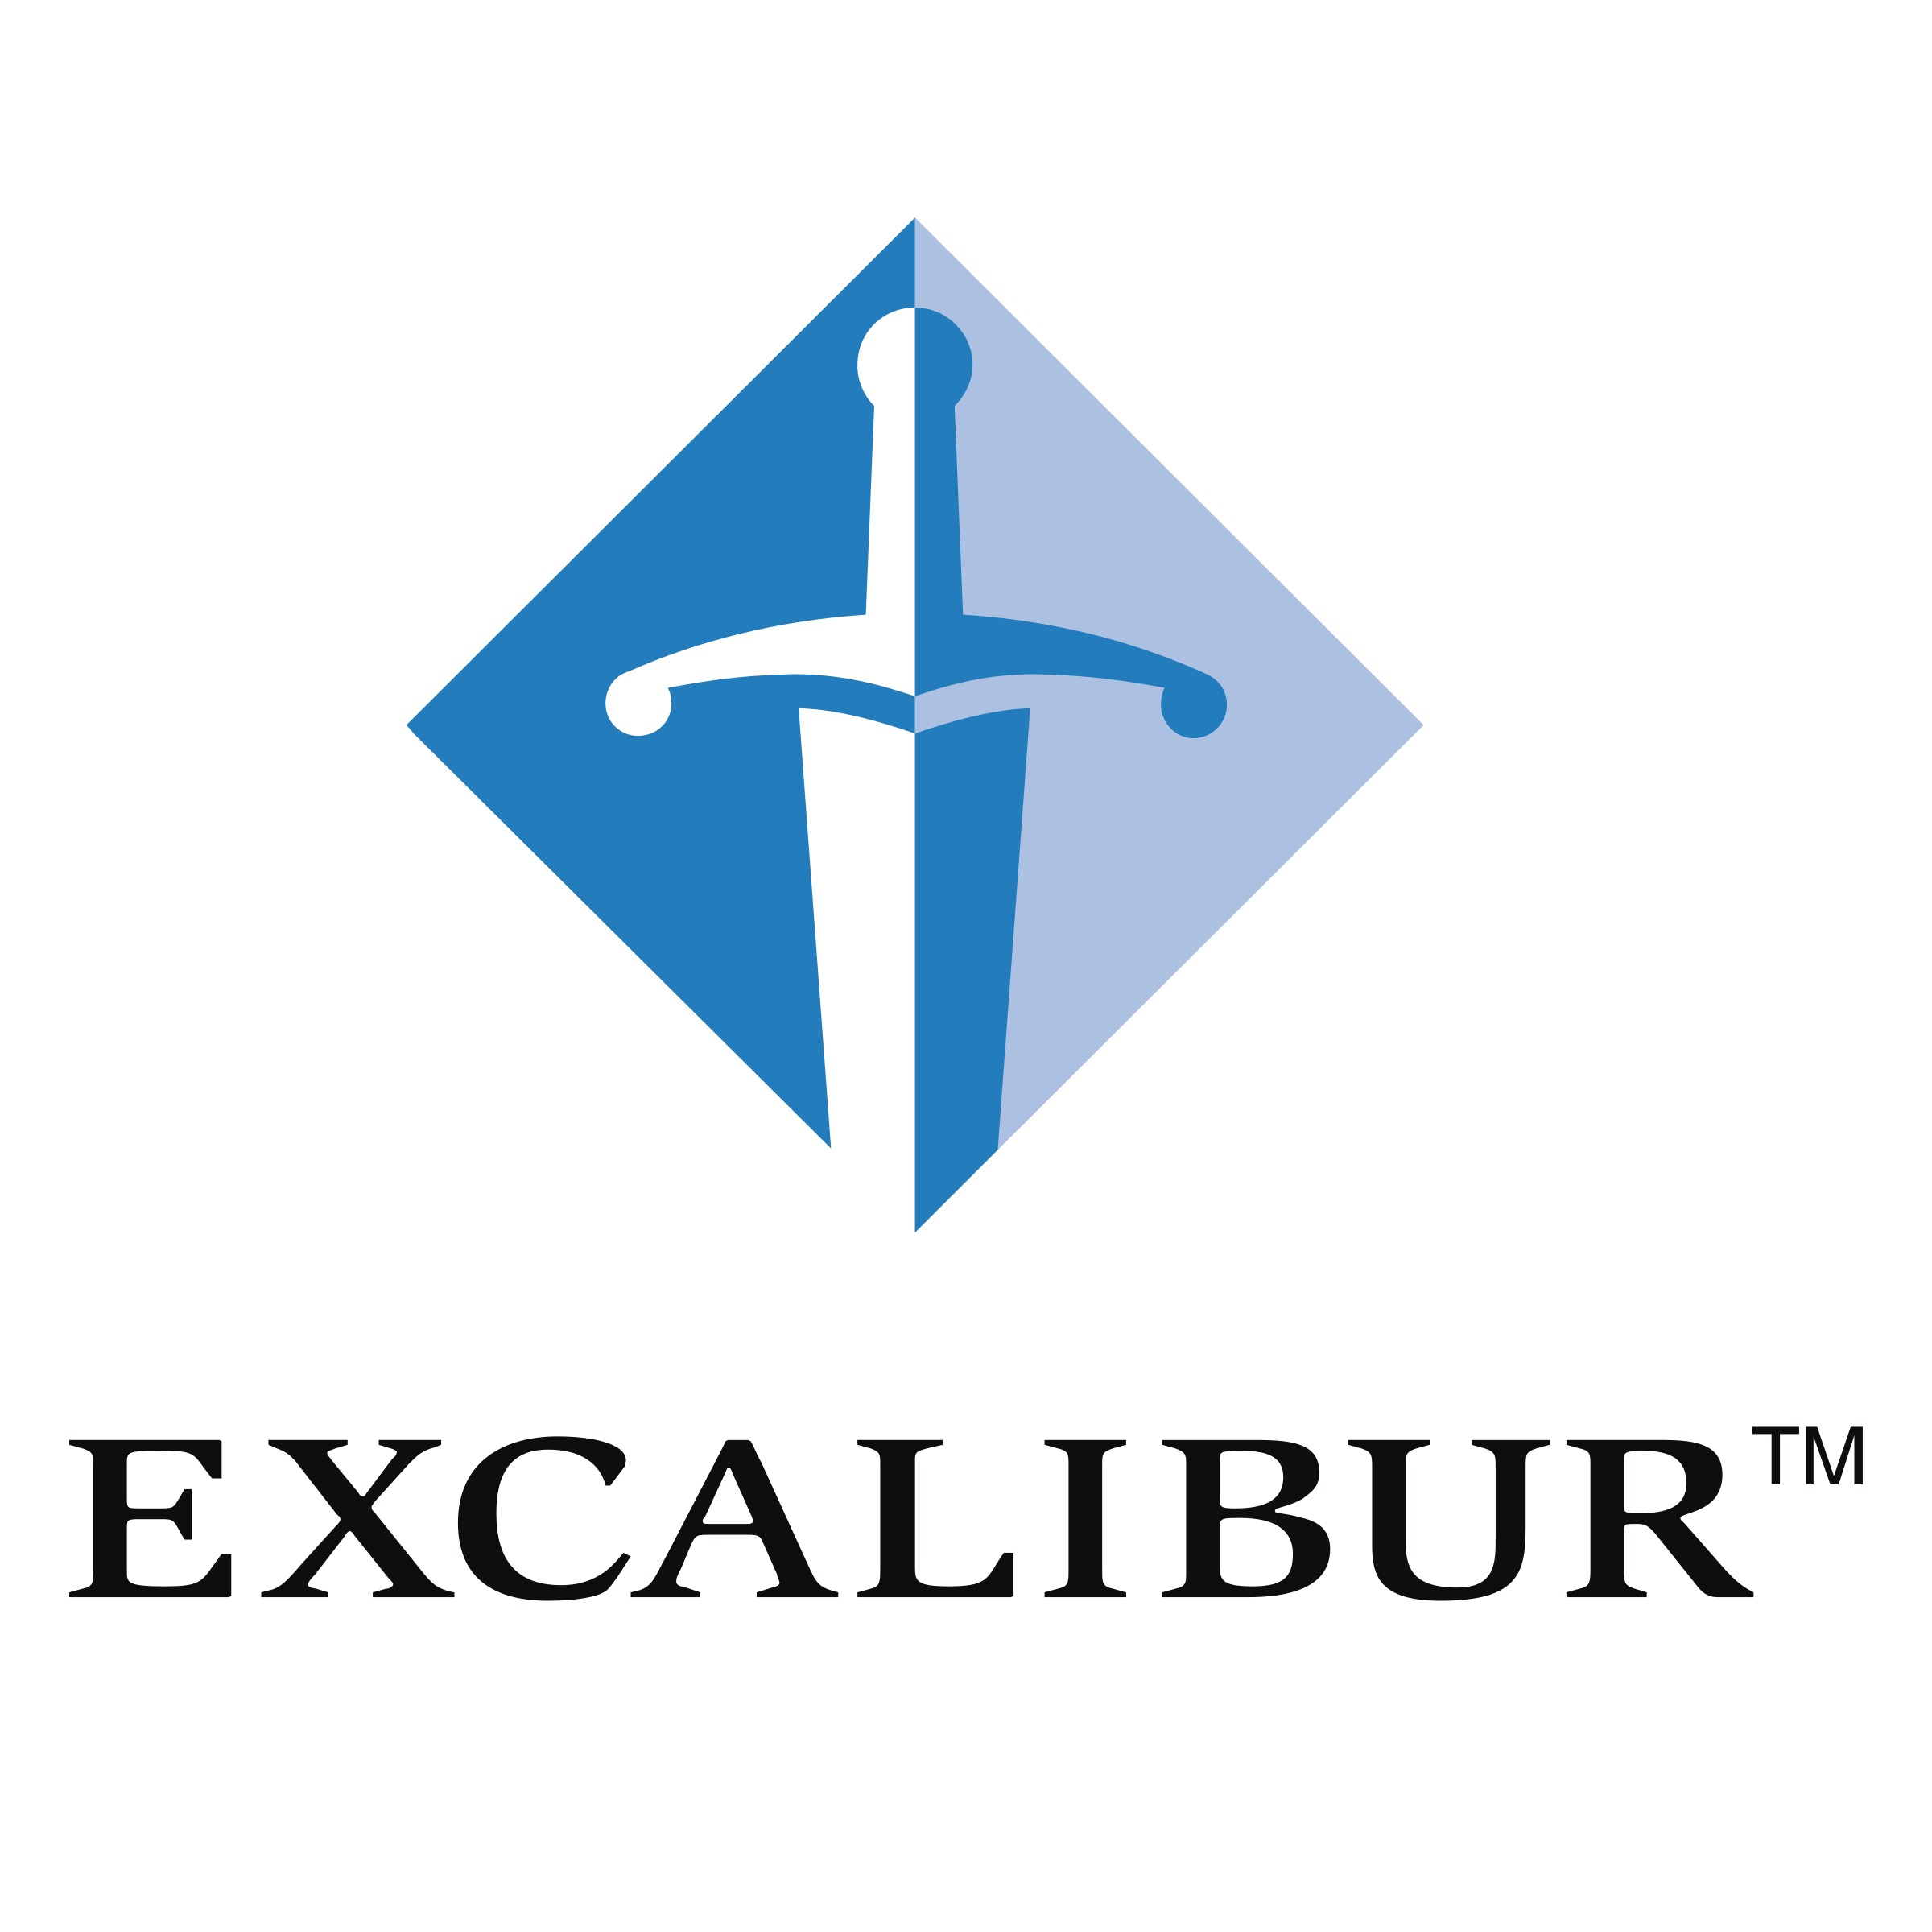 Excalibur Logo - Excalibur Logo PNG Transparent & SVG Vector - Freebie Supply